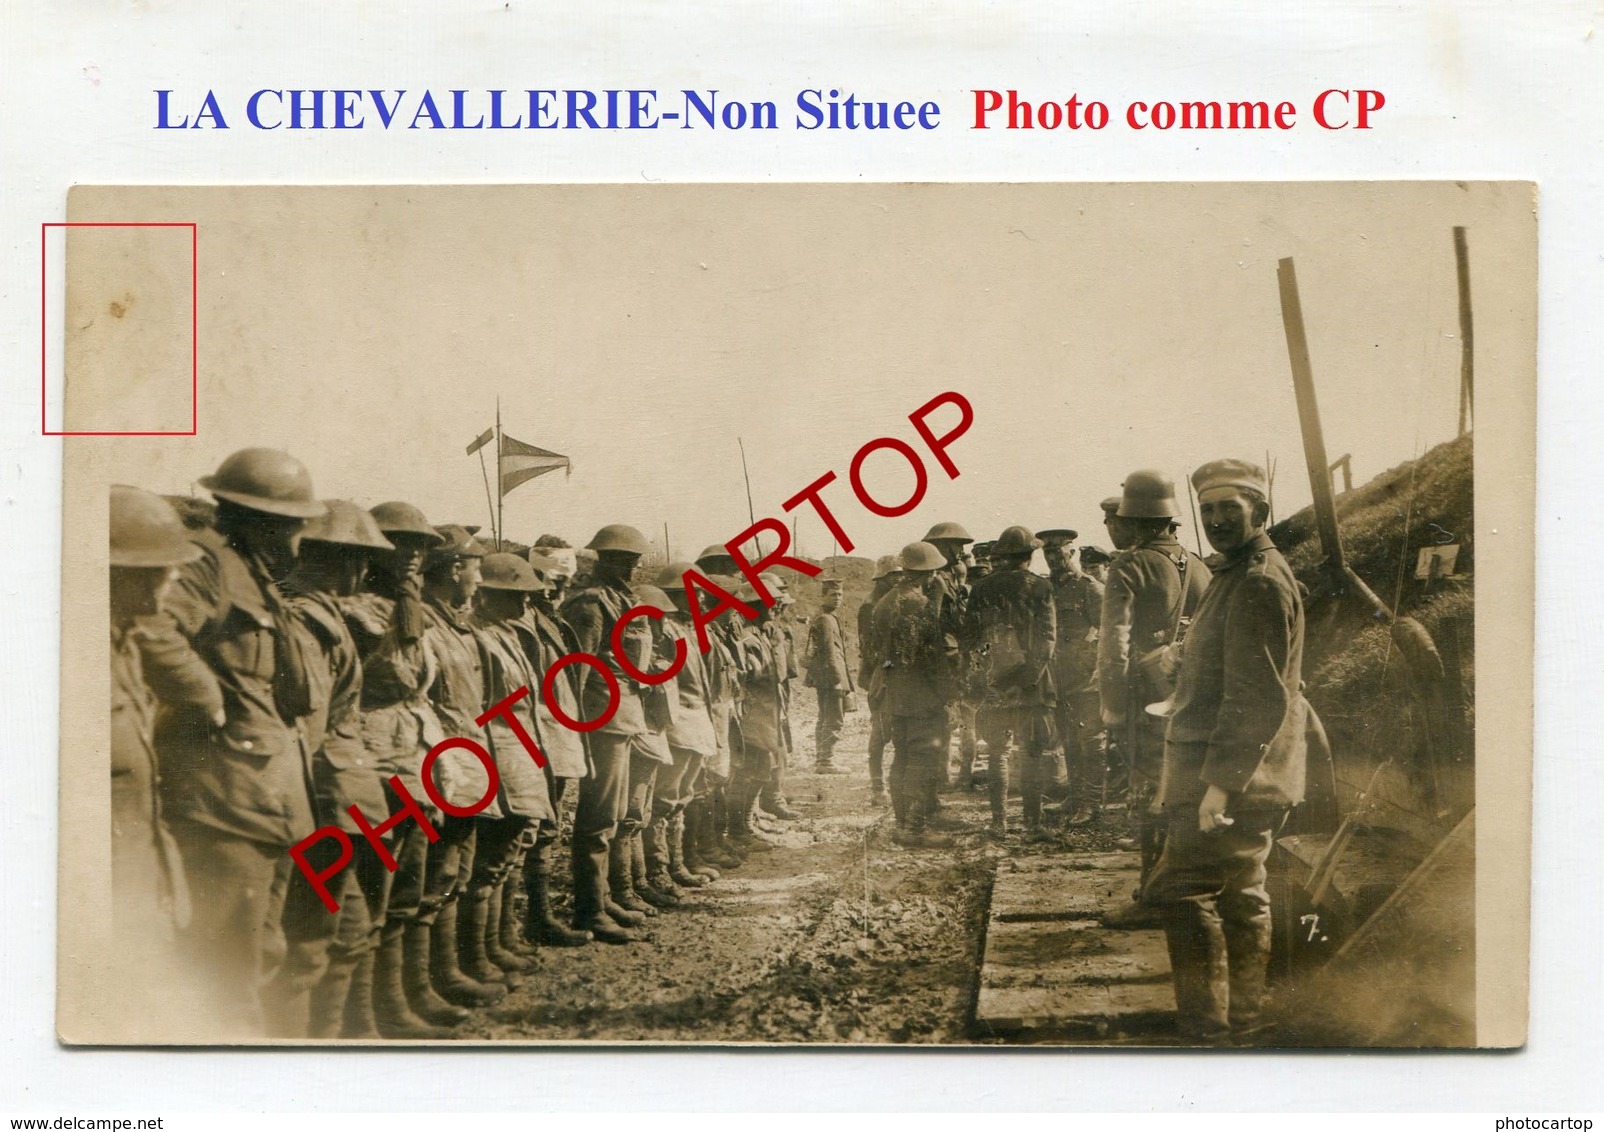 La CHEVALLERIE-Prisonniers Anglais-Position Allemande-Avril 1918-PHOTO NON SITUEE All.-Guerre 14-18-1WK-France-62-??-Mil - Croisilles